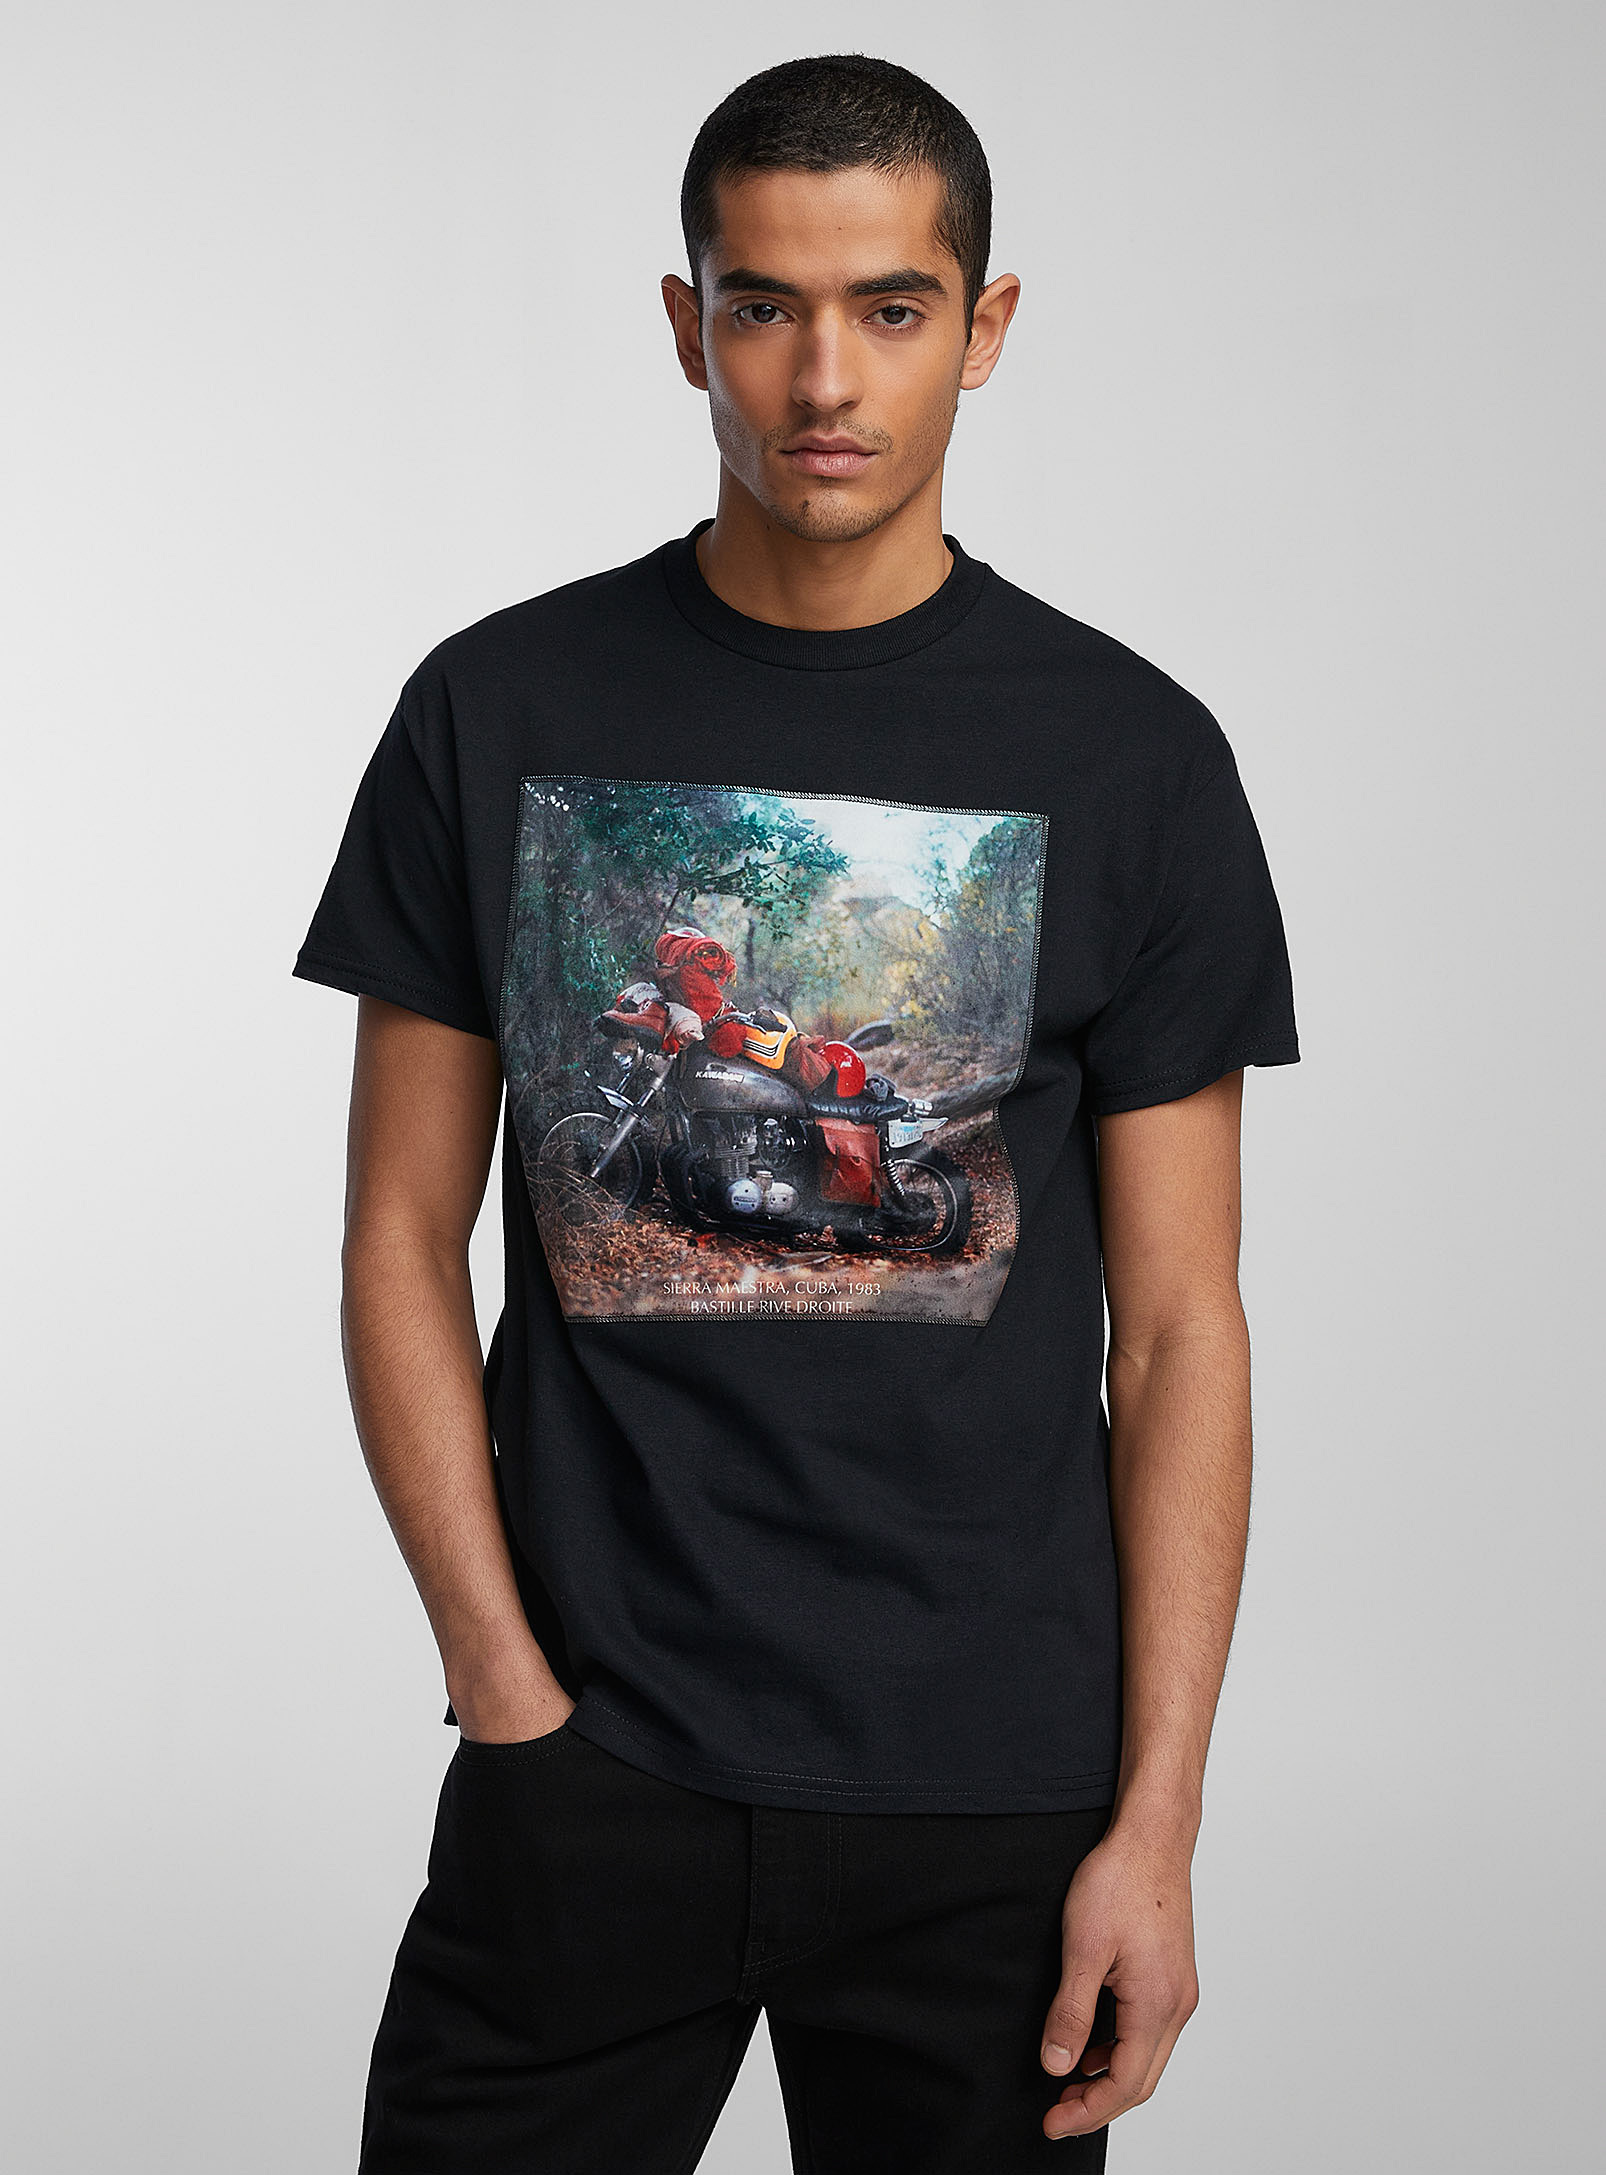 Bastille - Men's Sierra Maestra appliqué T-shirt